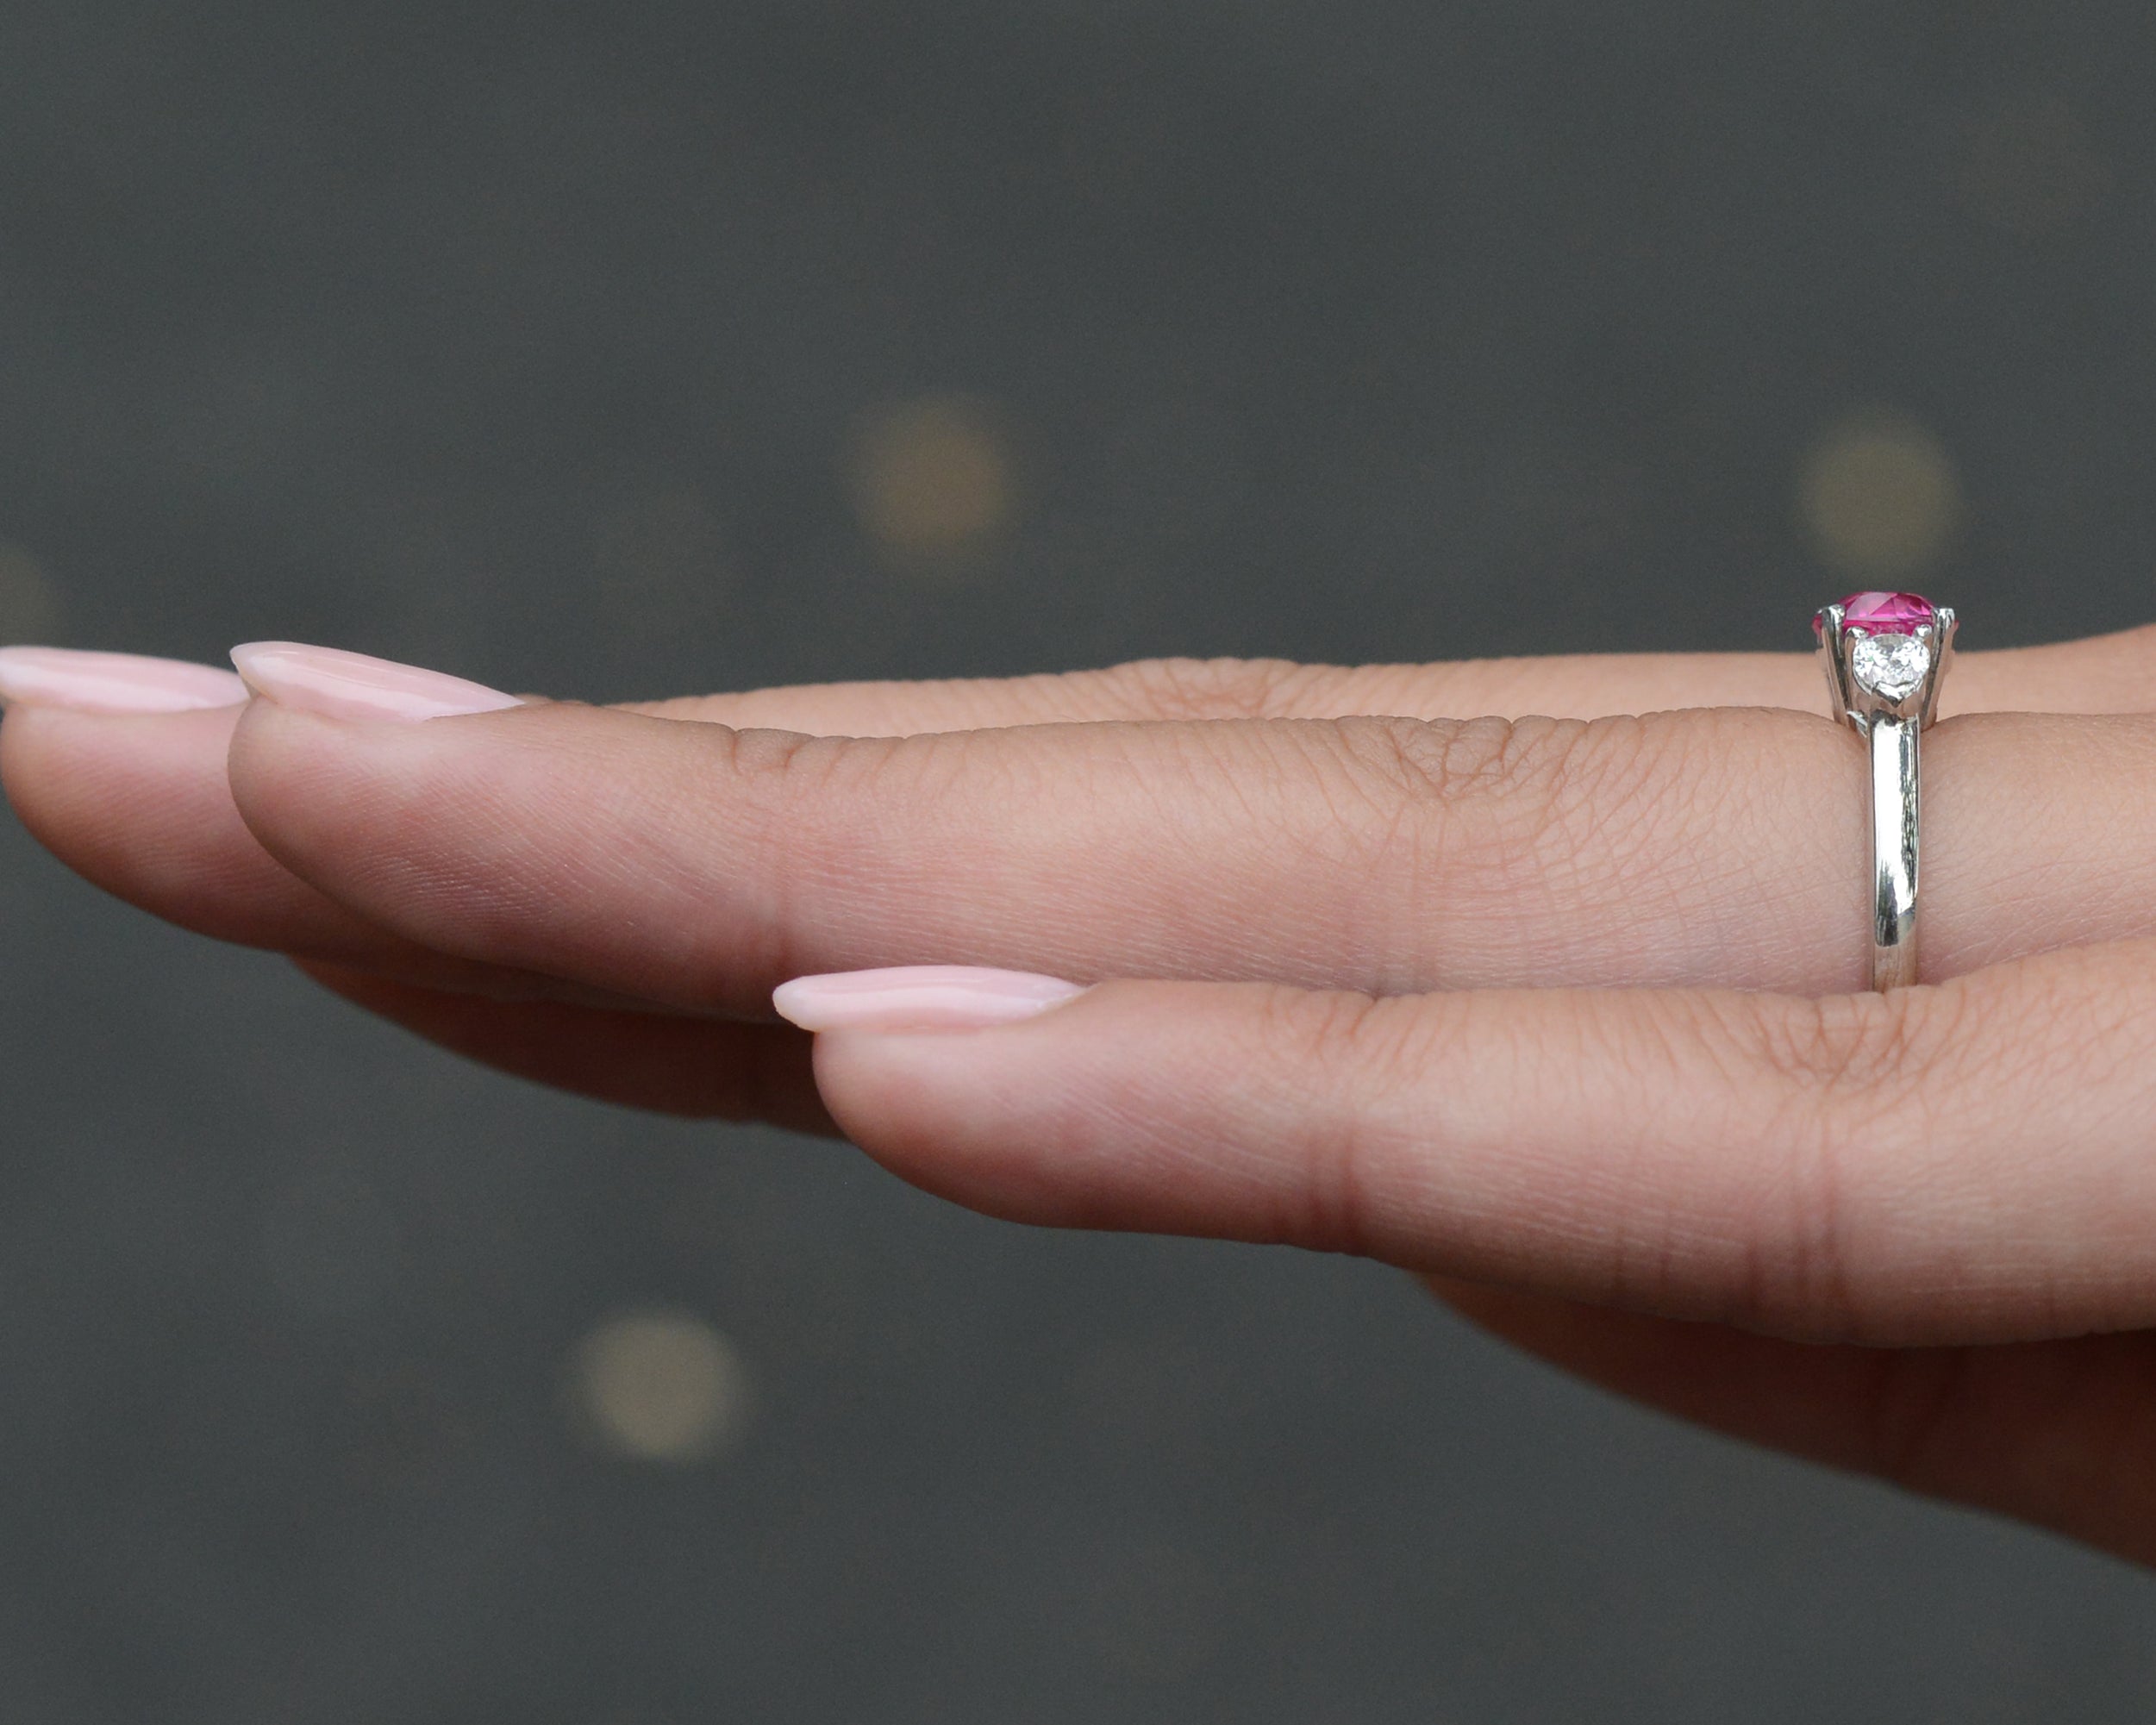 Vintage 3 Stone Ruby Diamond Gemstone Engagement Ring